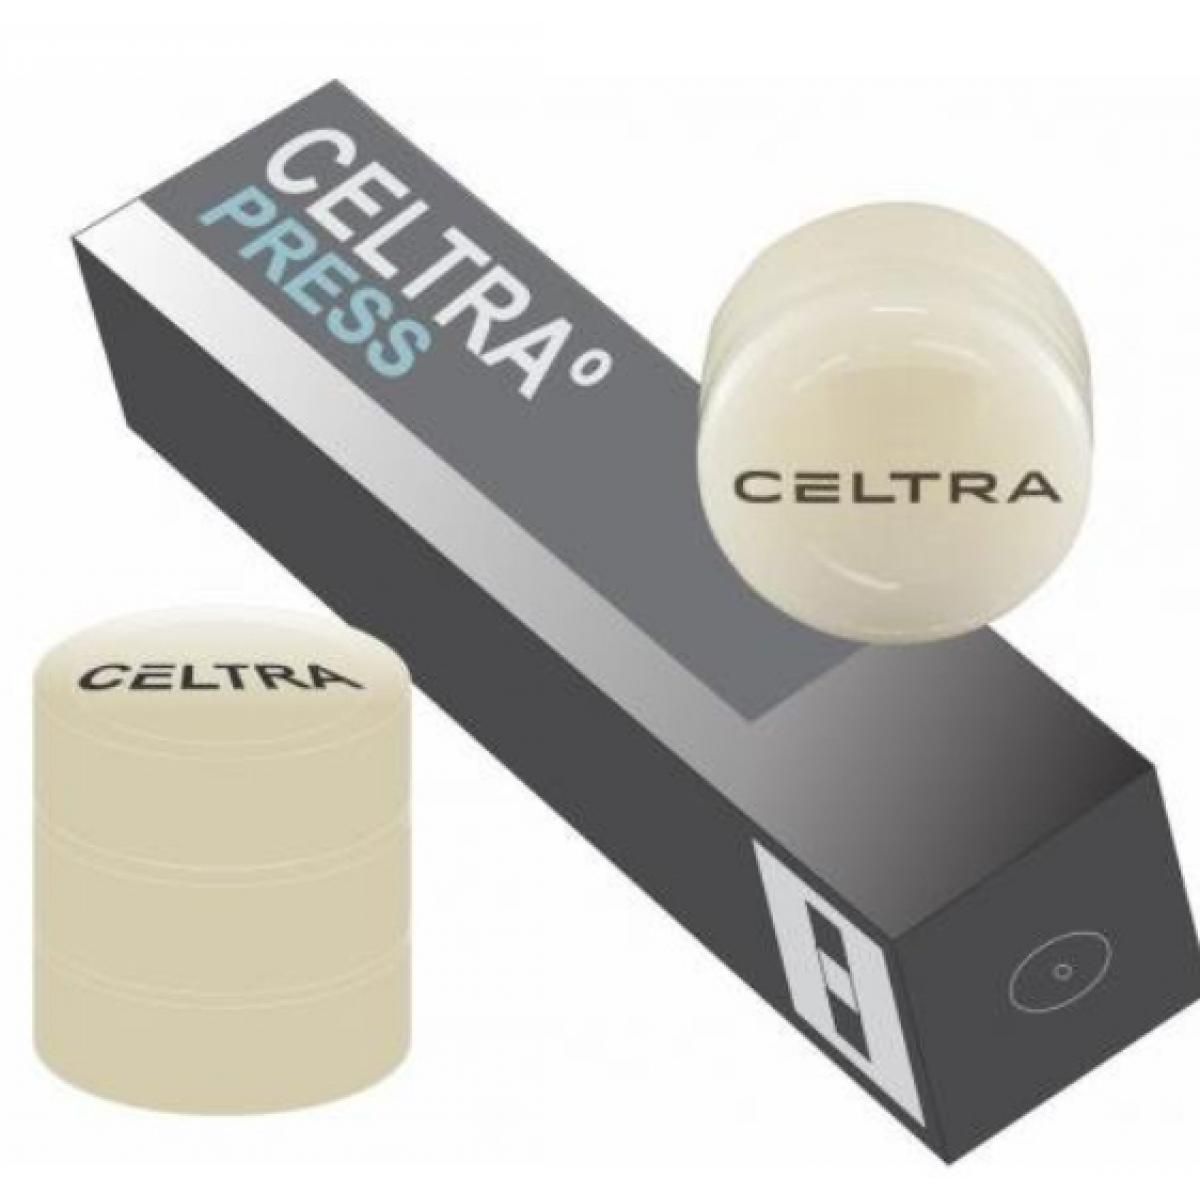 CELTRA PRESS LT B3 5 X 3 GR DENTSPLY -